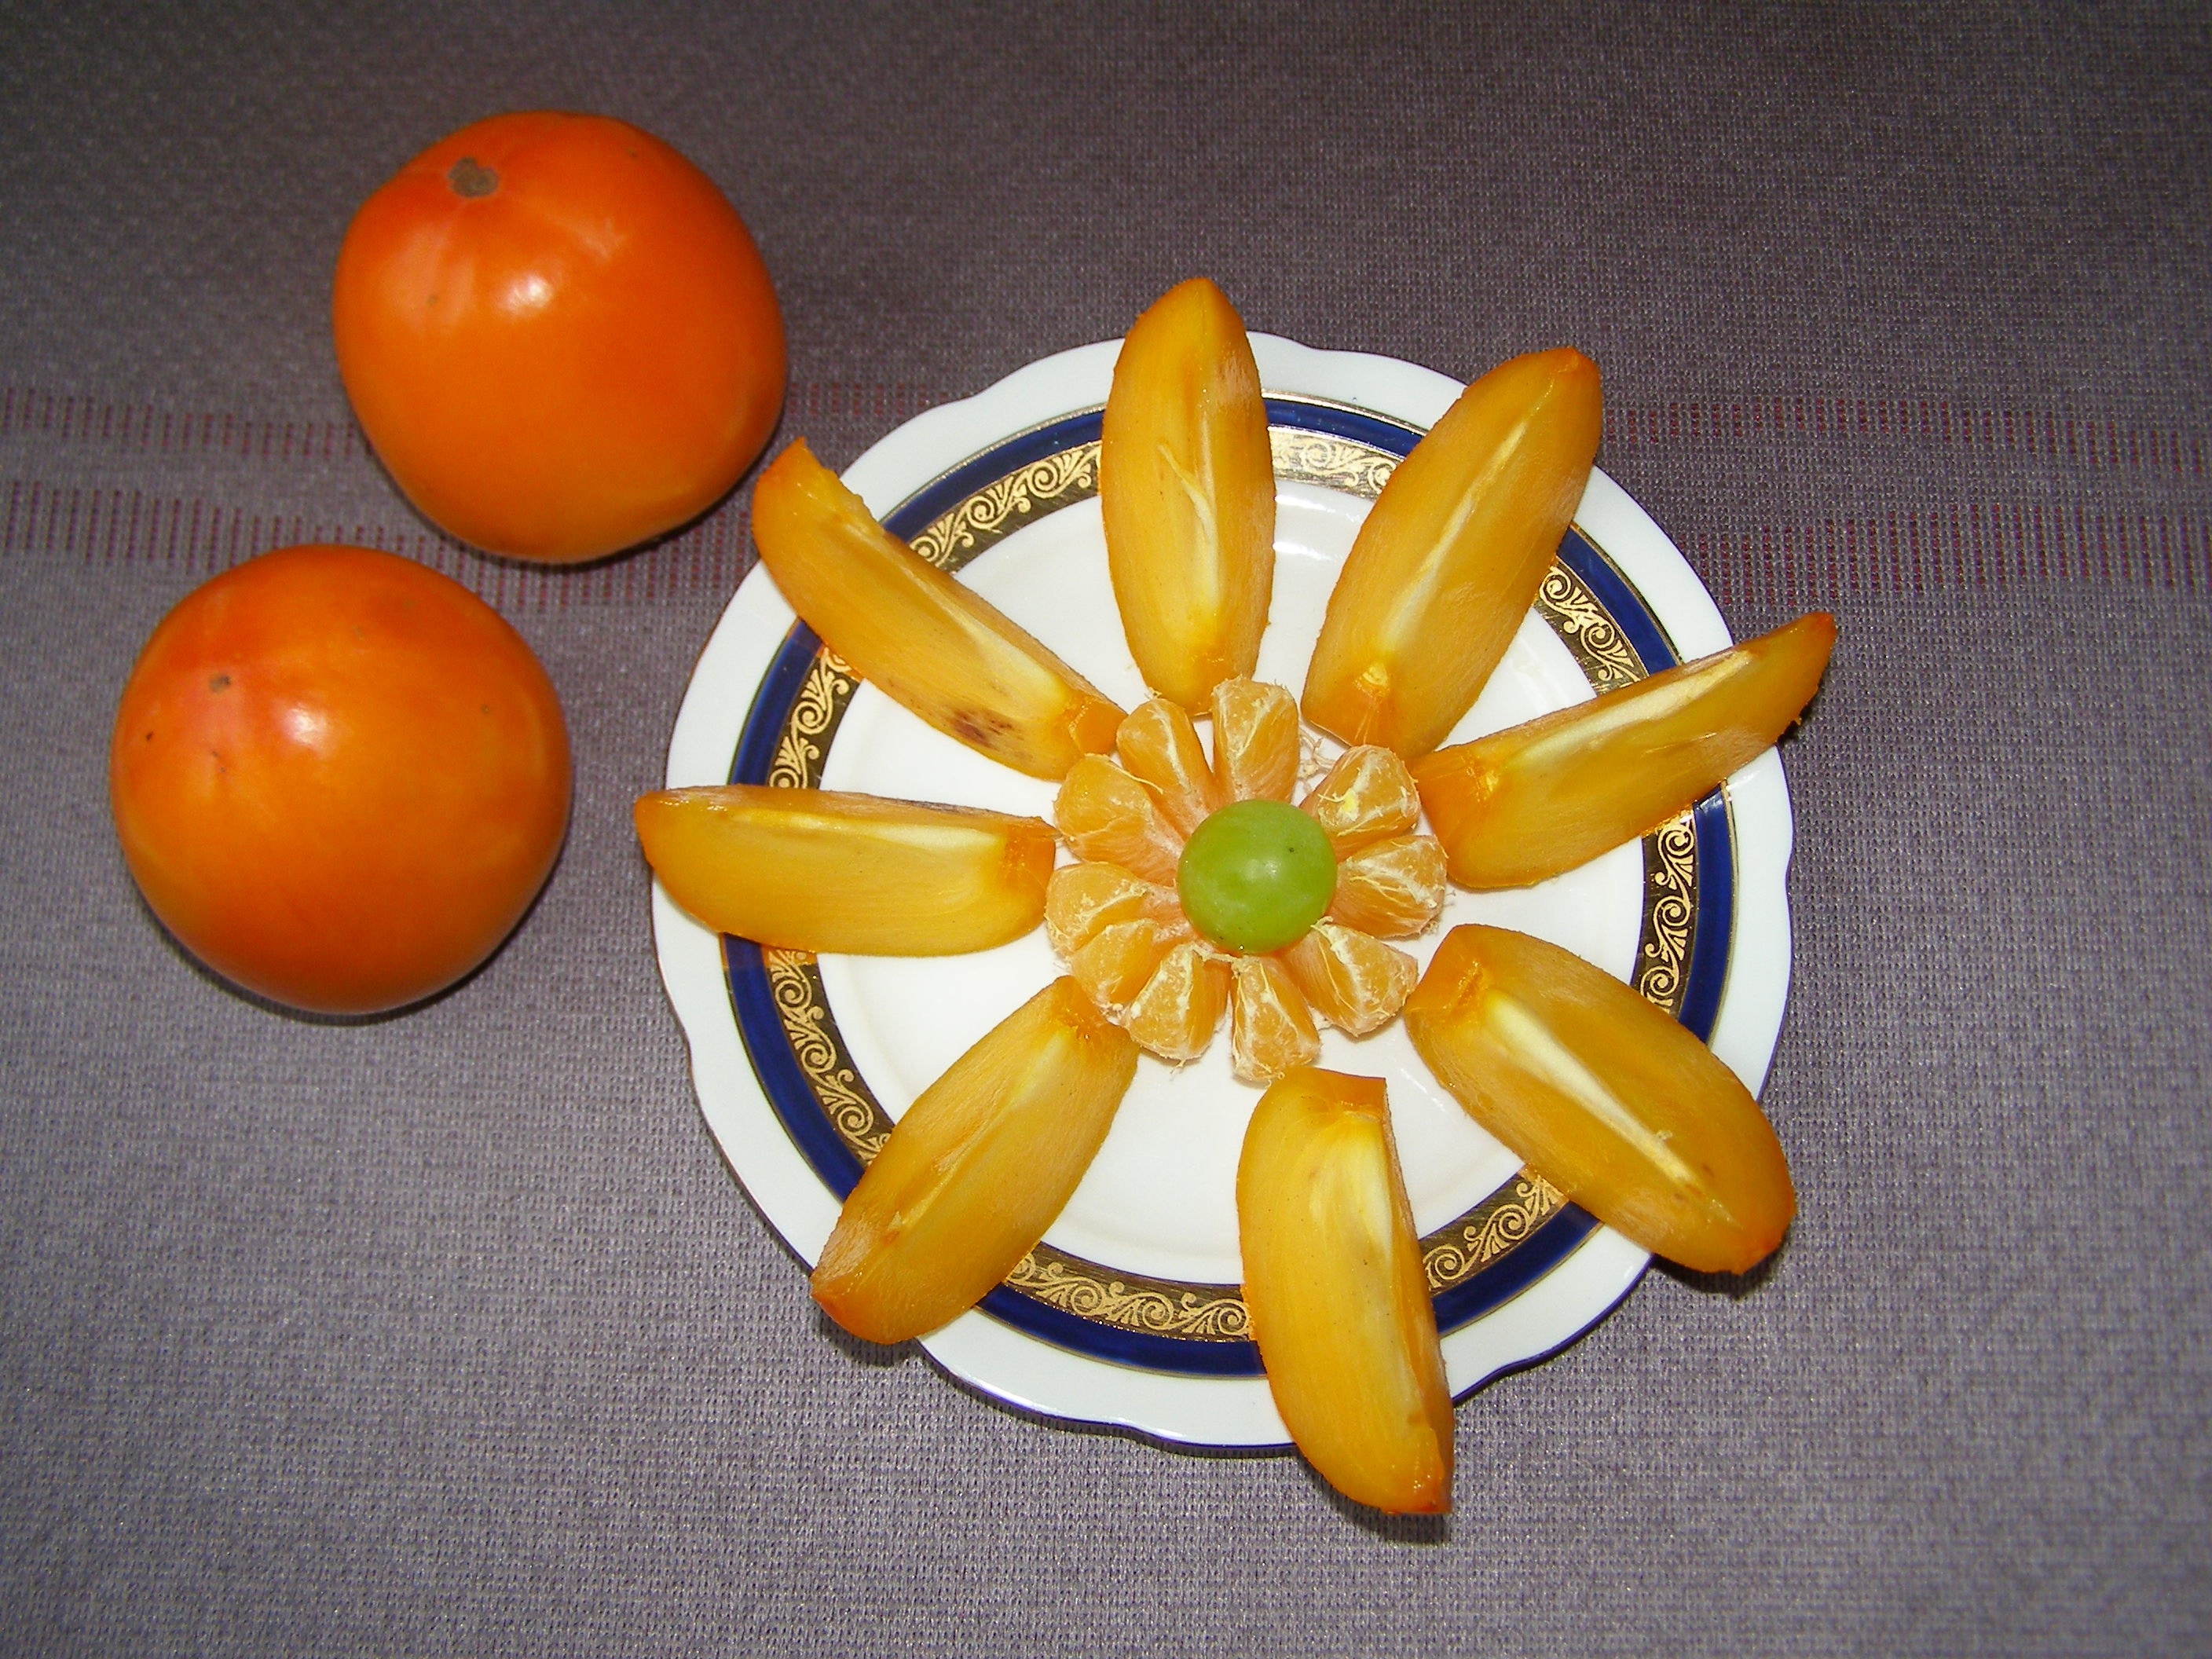 two orange round fruits